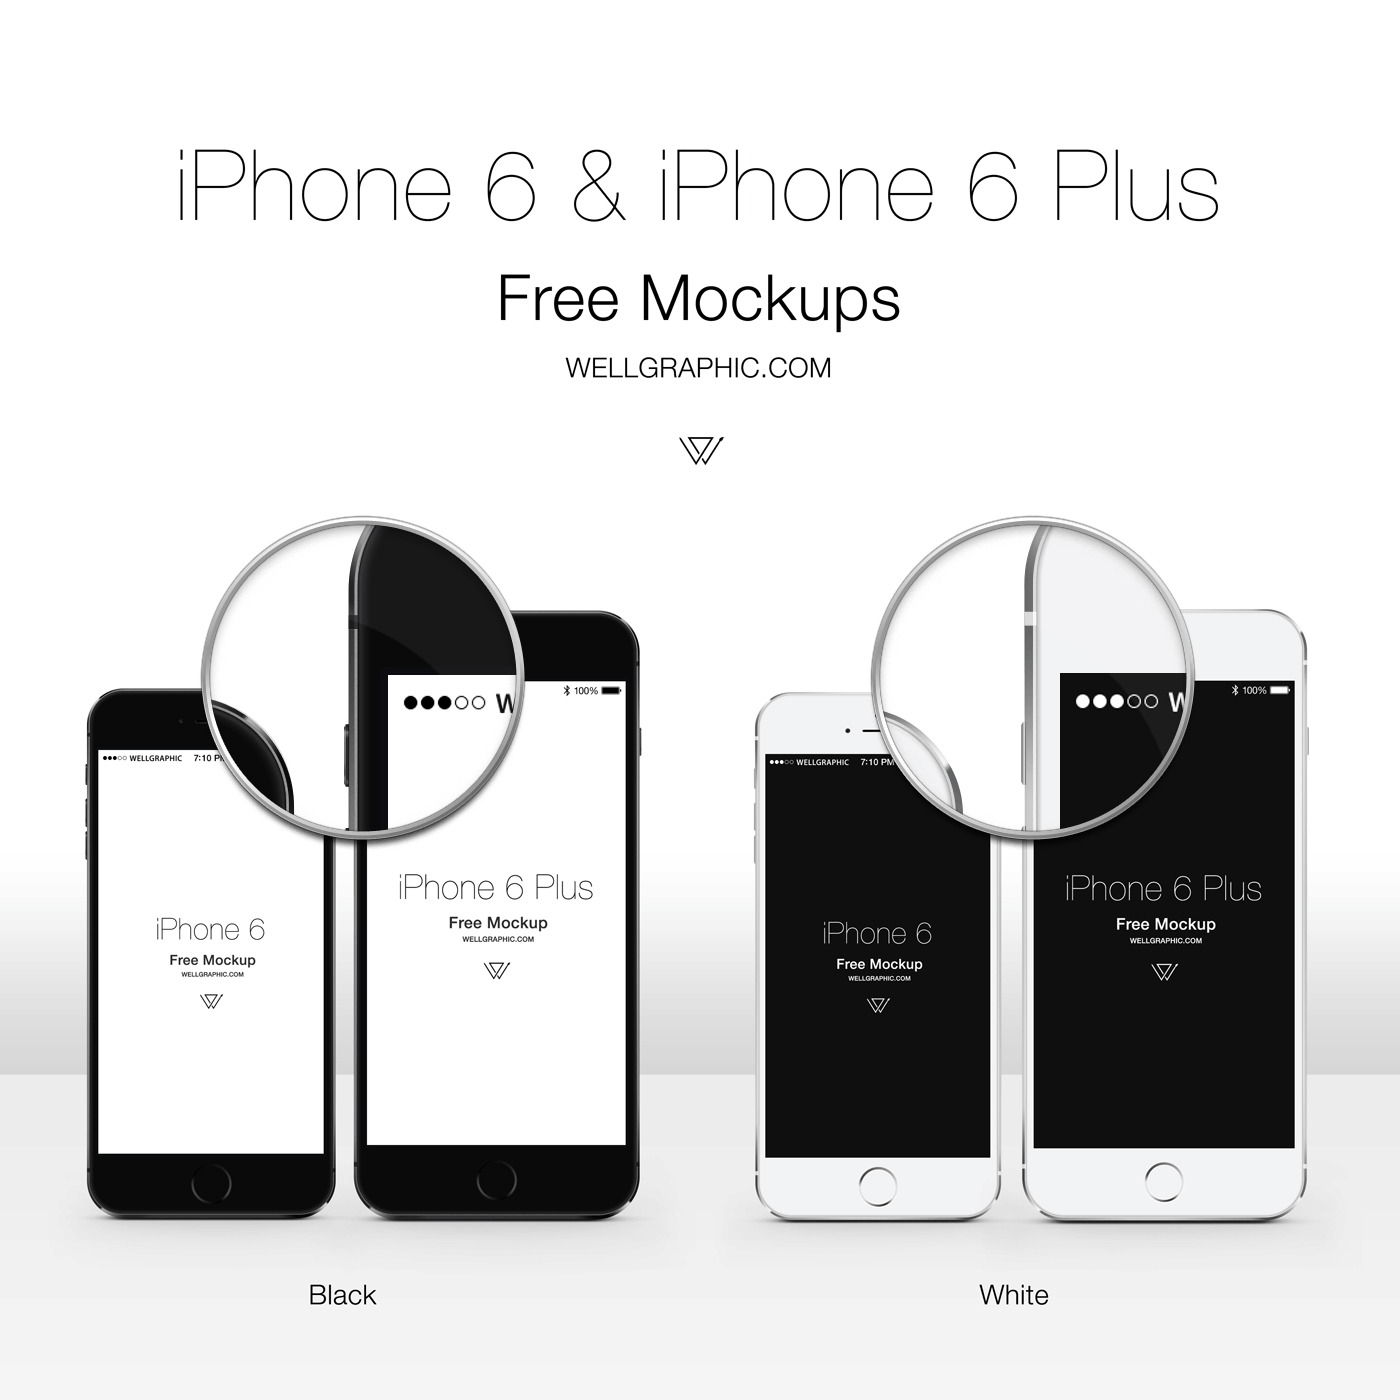 iPhone 6 & iPhone 6 Plus Free Mockups